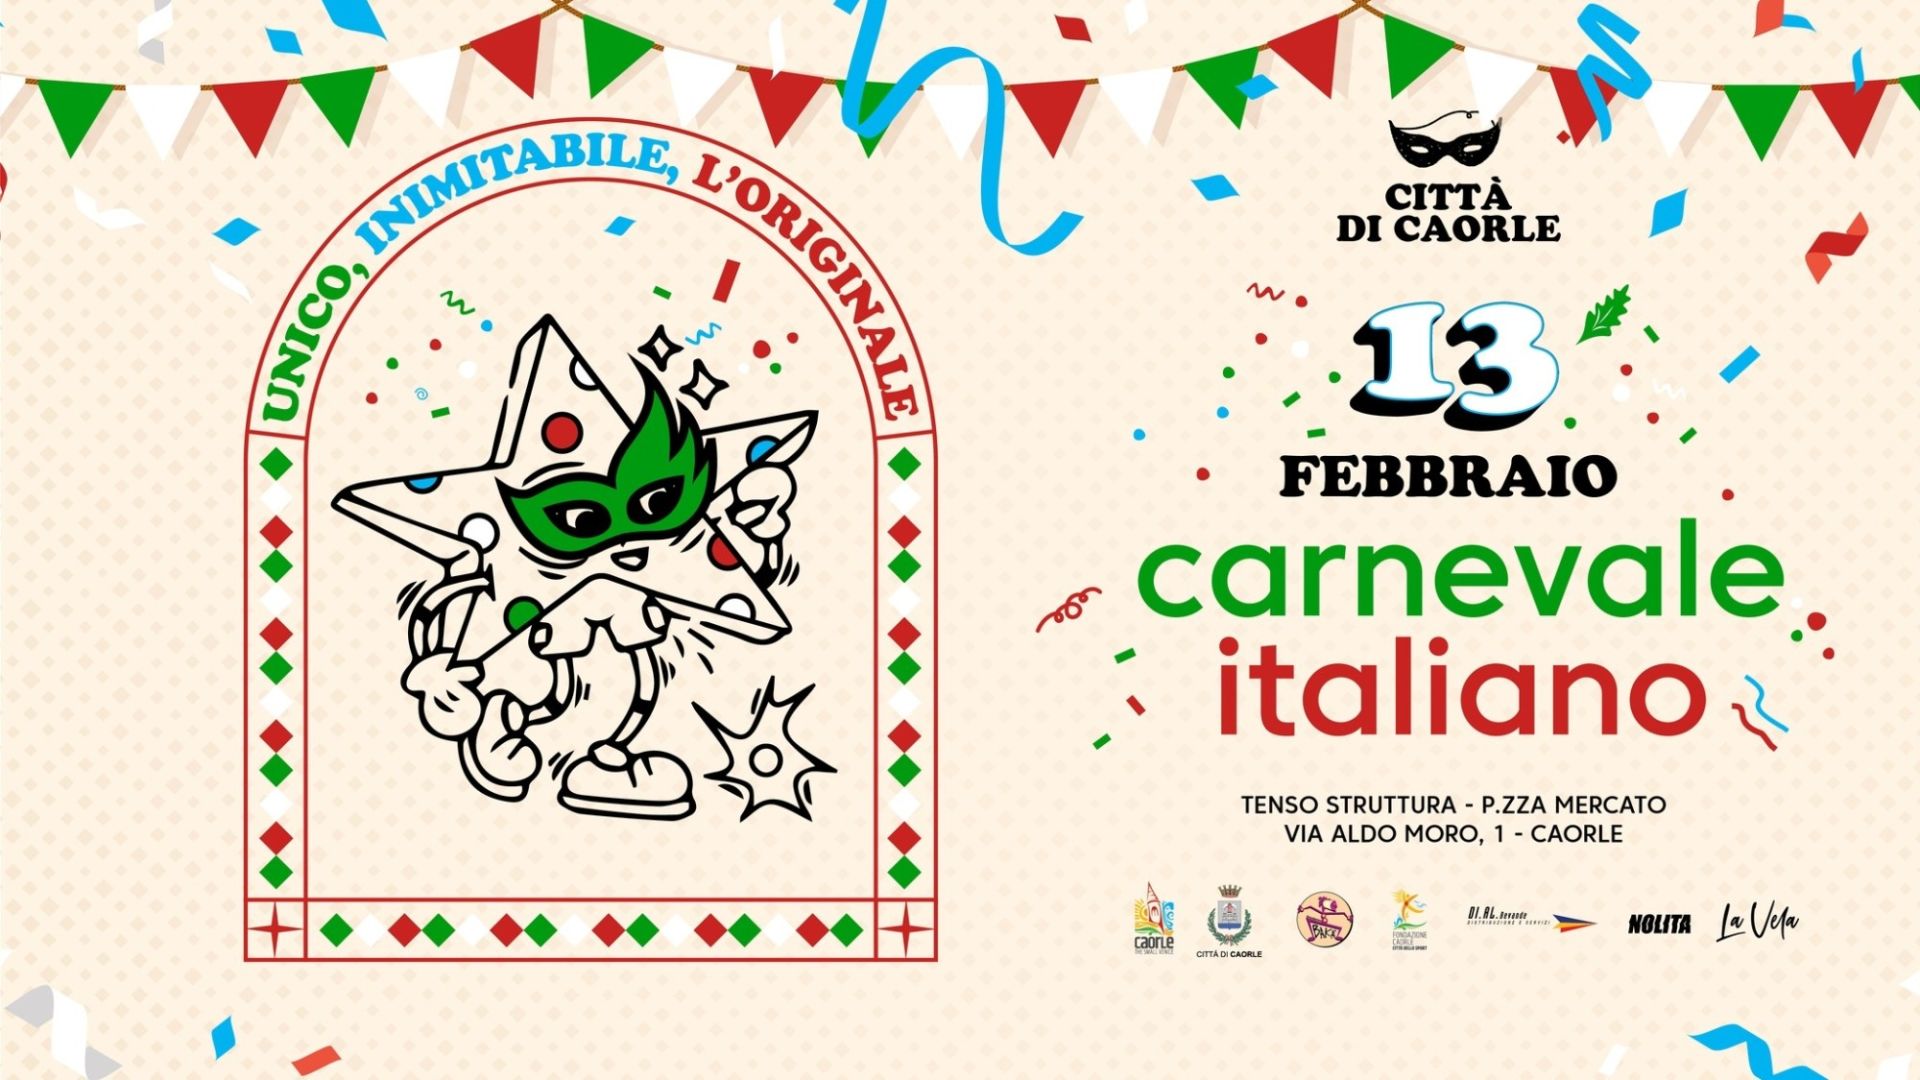 Carnevale Italiano